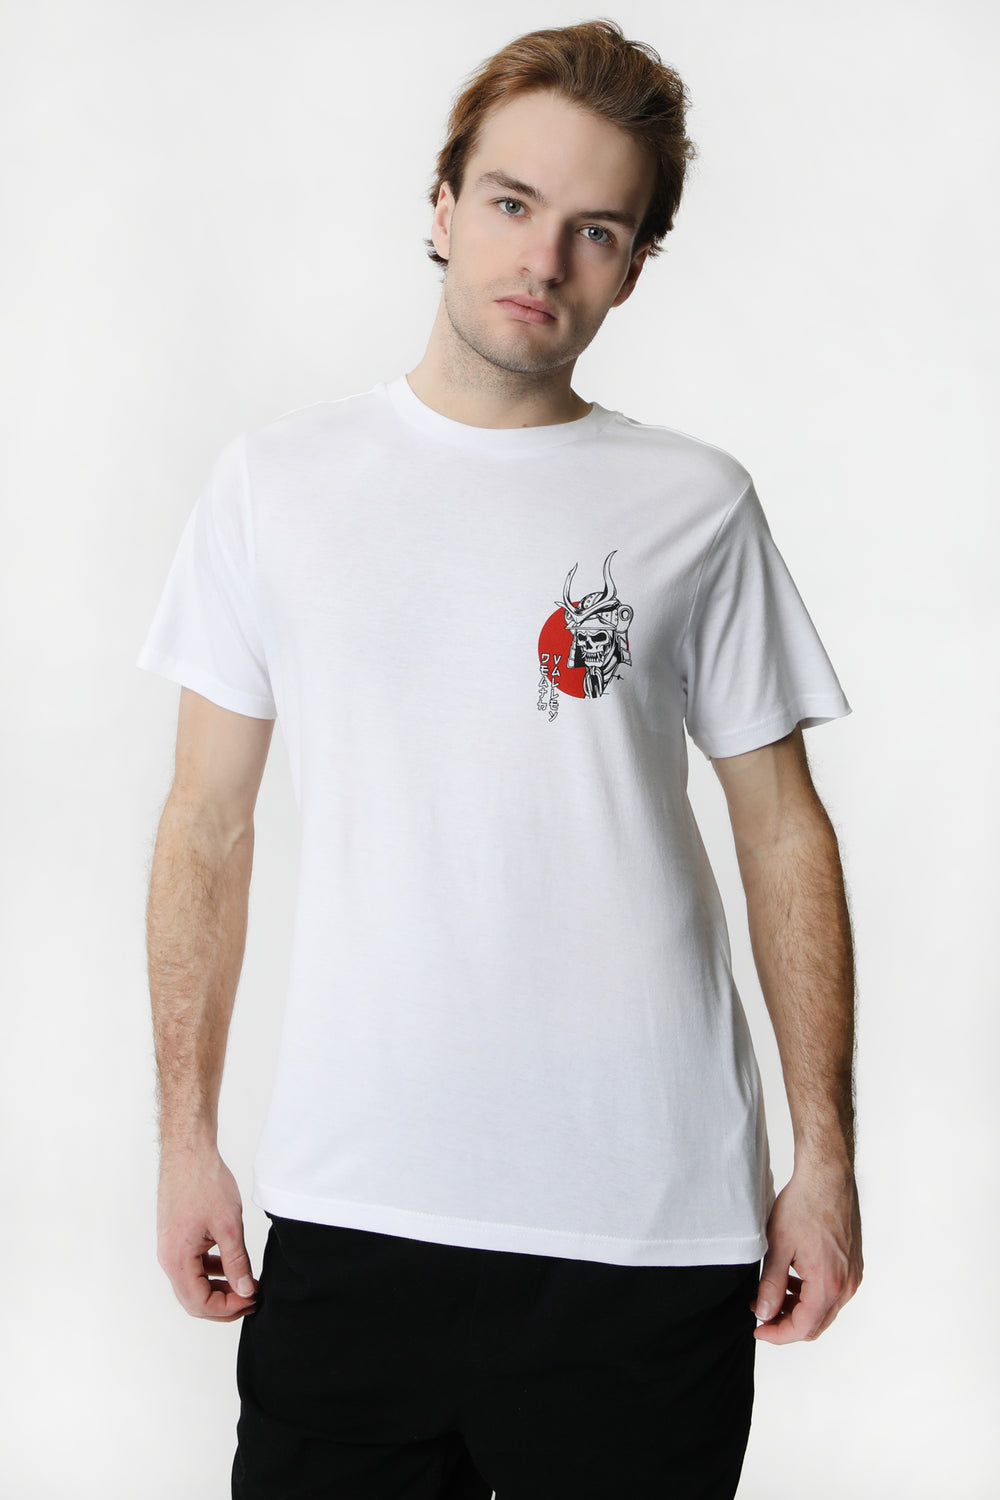 T-Shirt Imprimé Samouraï Death Valley Homme T-Shirt Imprimé Samouraï Death Valley Homme